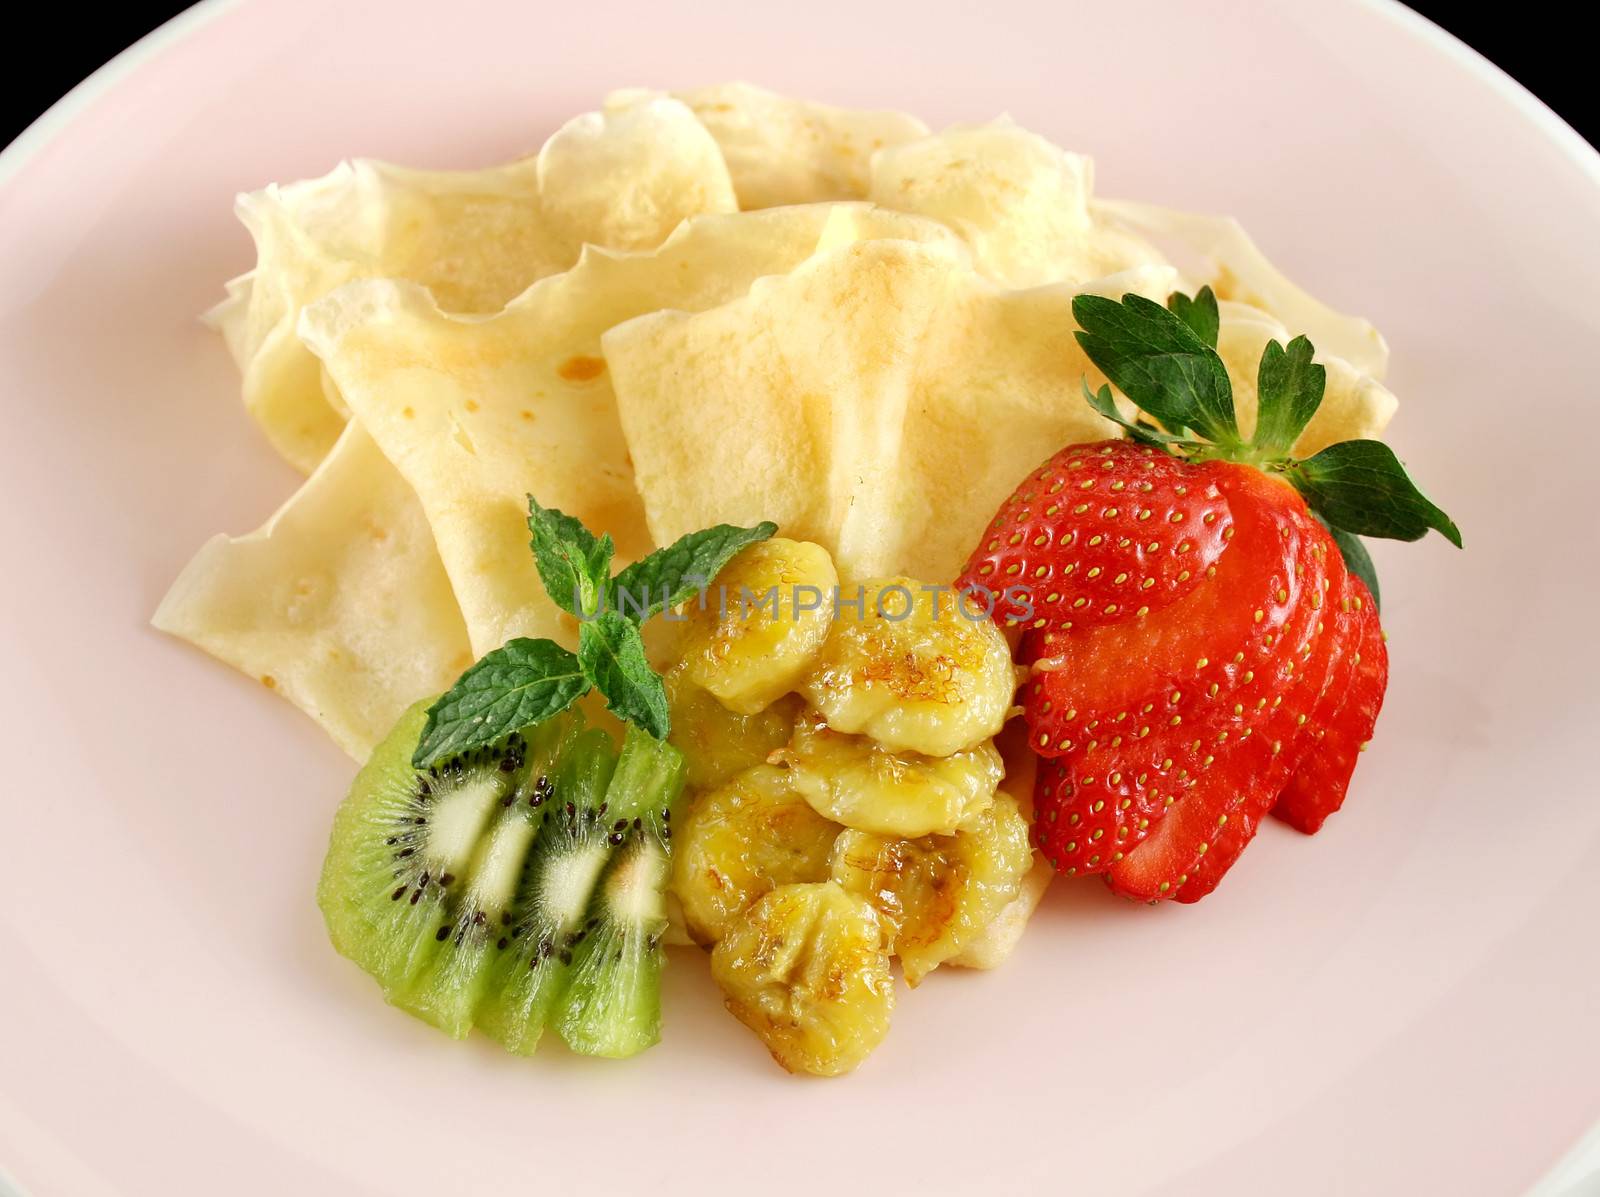 Caramelized banana crepes with strawberries and kiwi fruit.